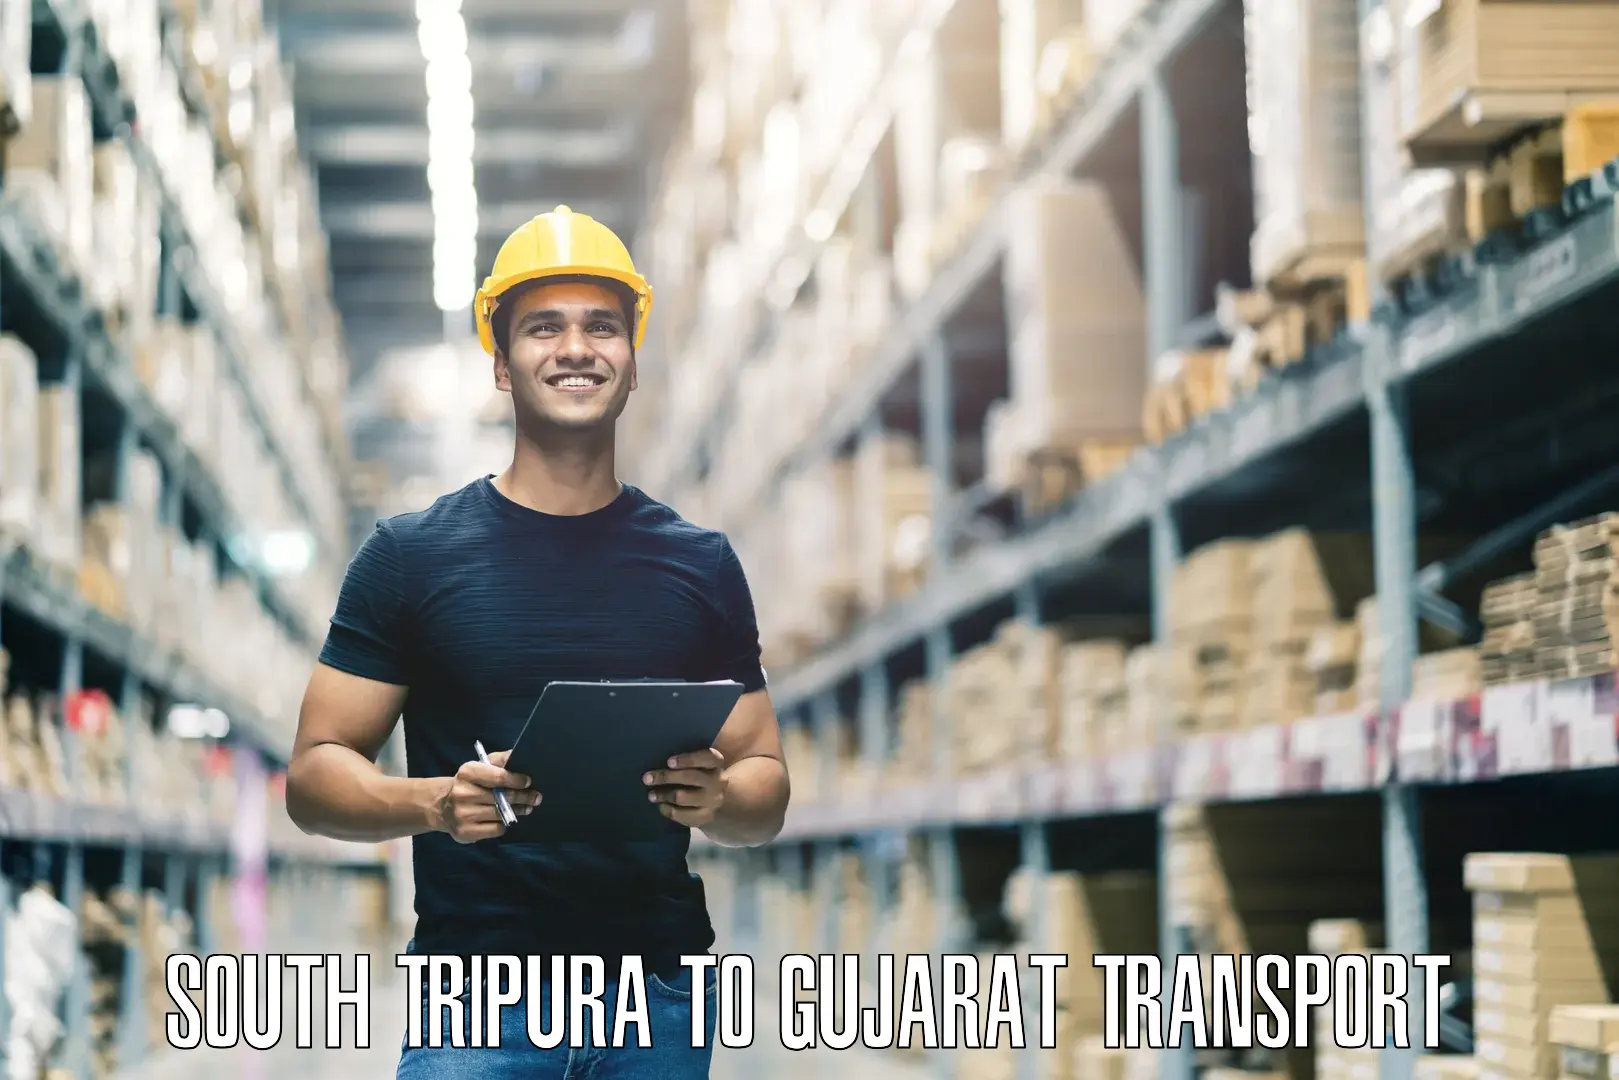 Bike shipping service South Tripura to Gujarat